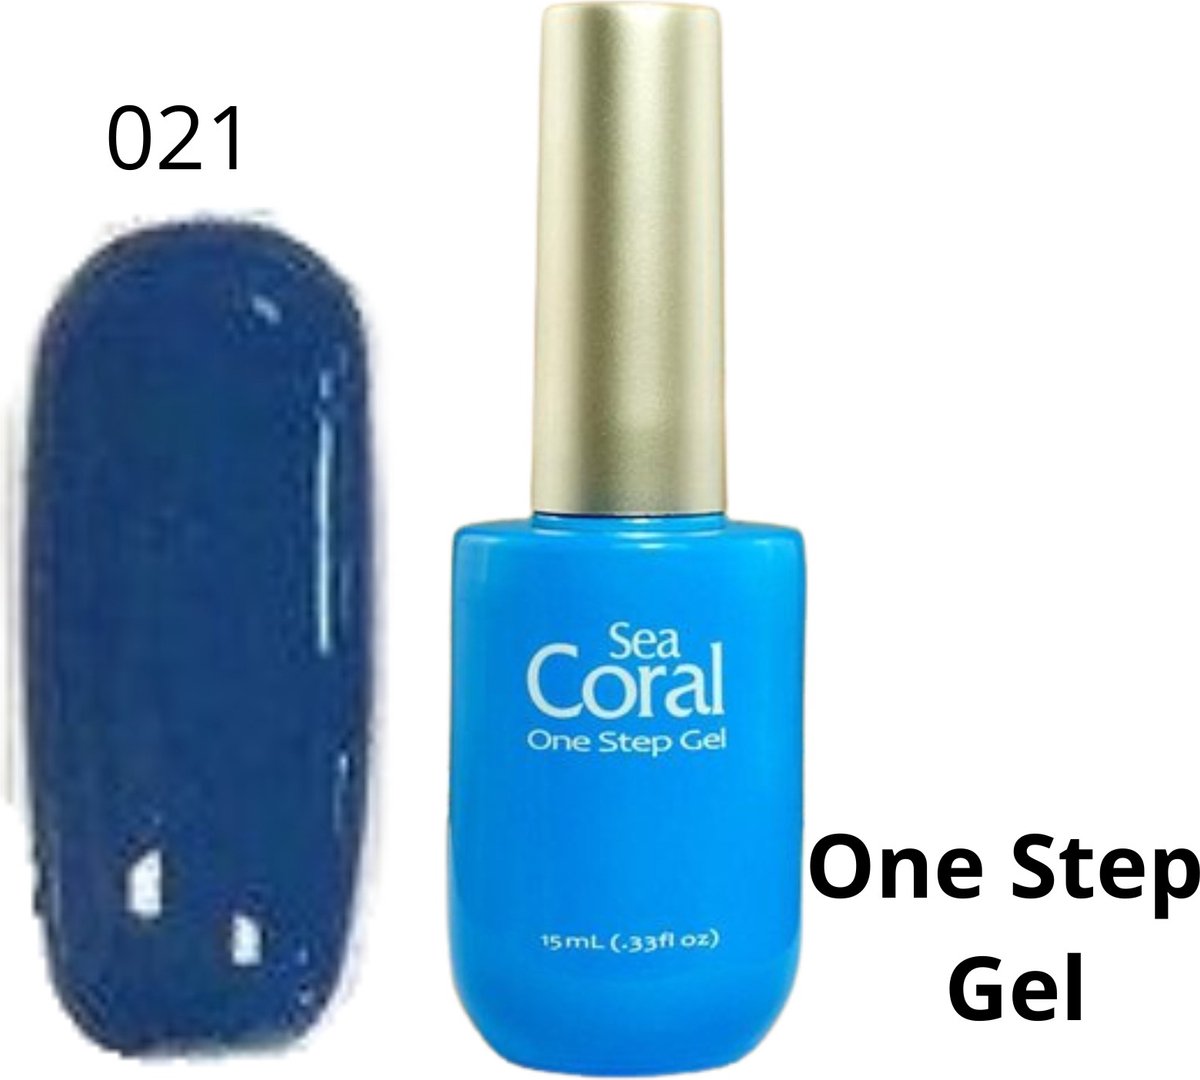 SeaCoral One Step No Wipe Gellak - Gel Nagellak - GelPolish – geen plaklaag - zónder kleeflaag, geschikt voor UV en LED – Blauw 021